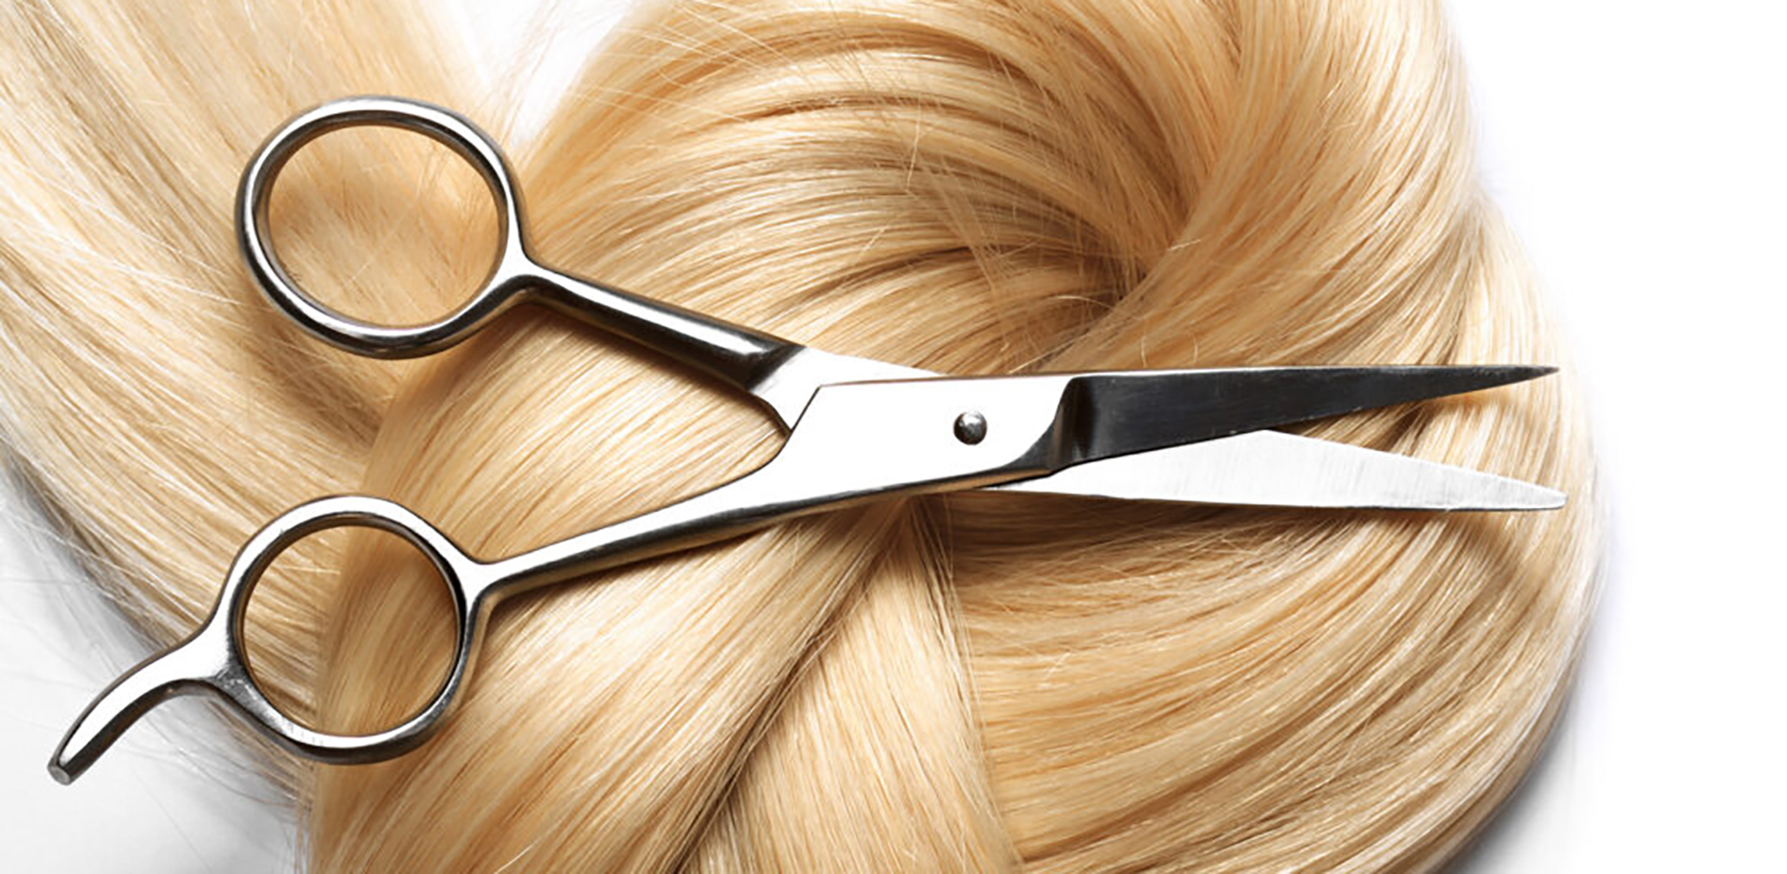 fabulous-fall-hair-trends-scissors-on-hair-main-image-1000x600